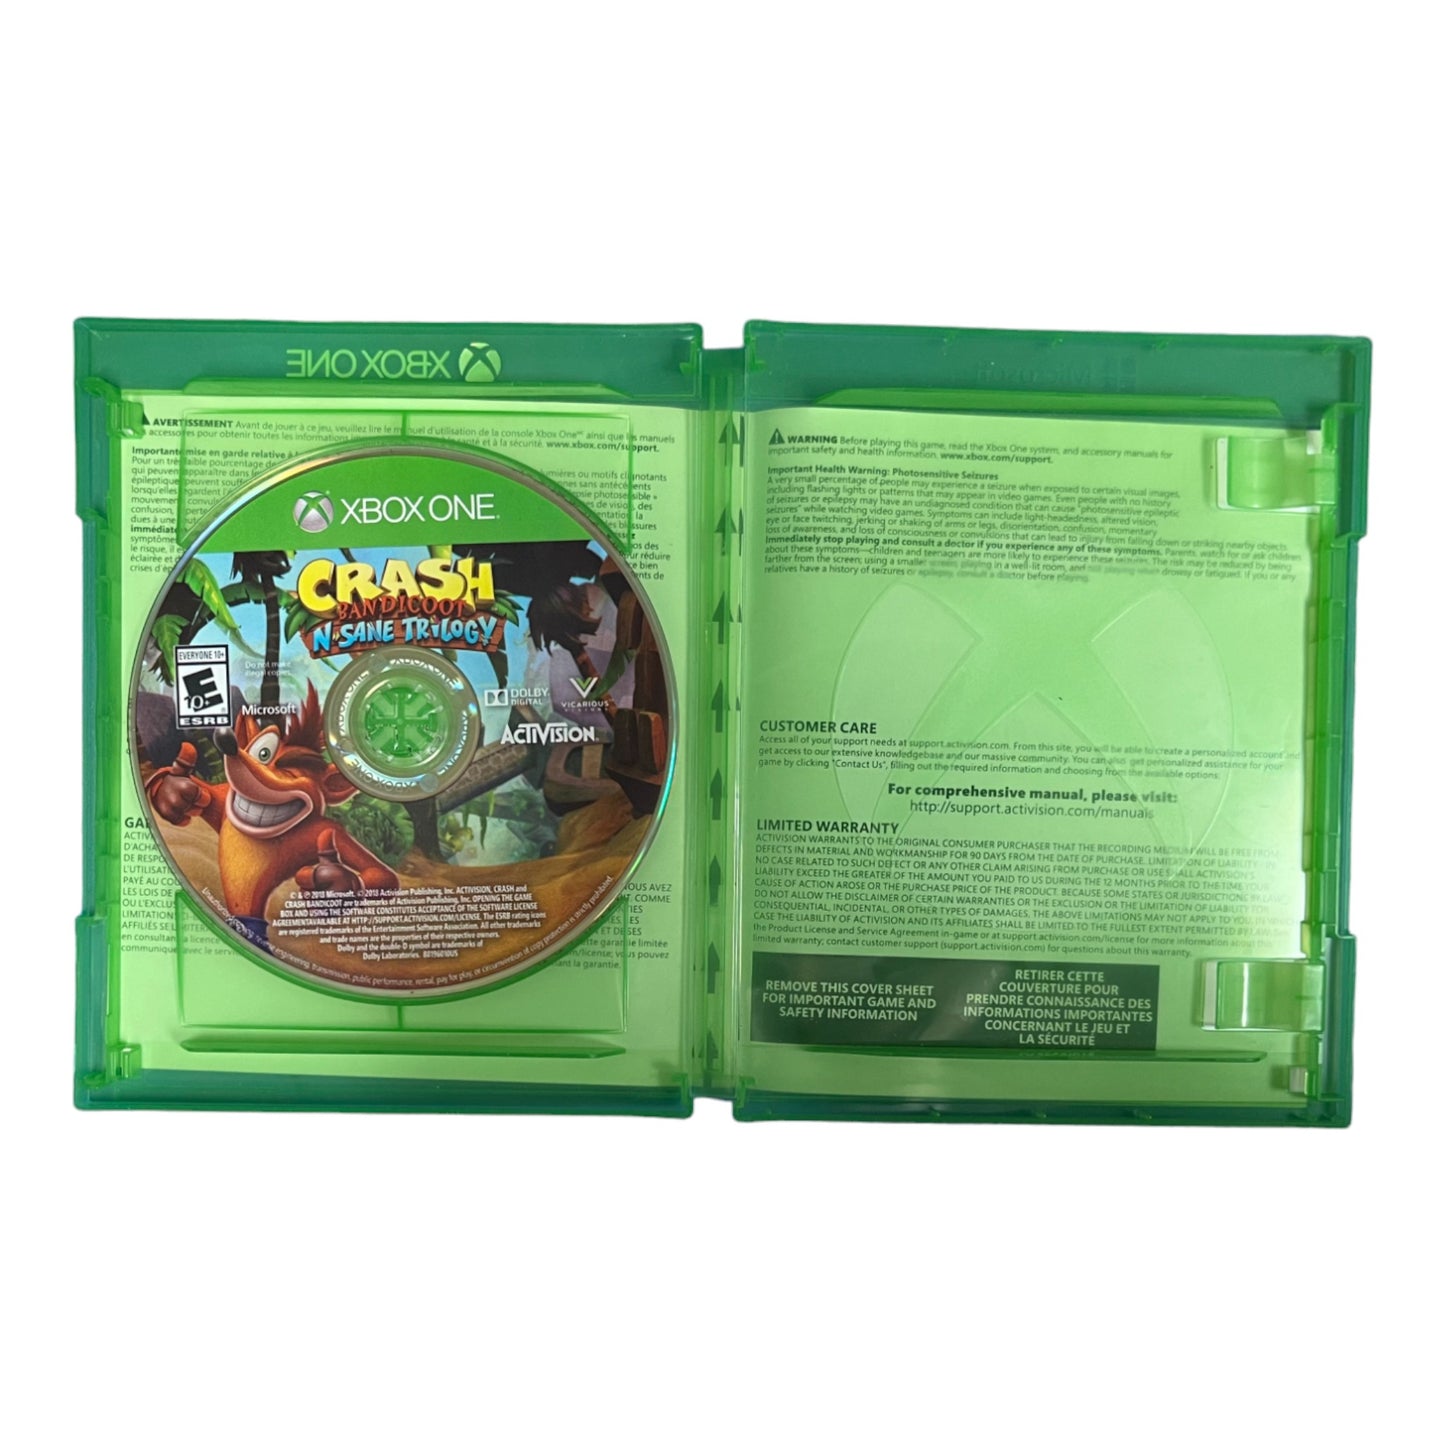 Crash Badicoot N Sane Triology (XboxOne)